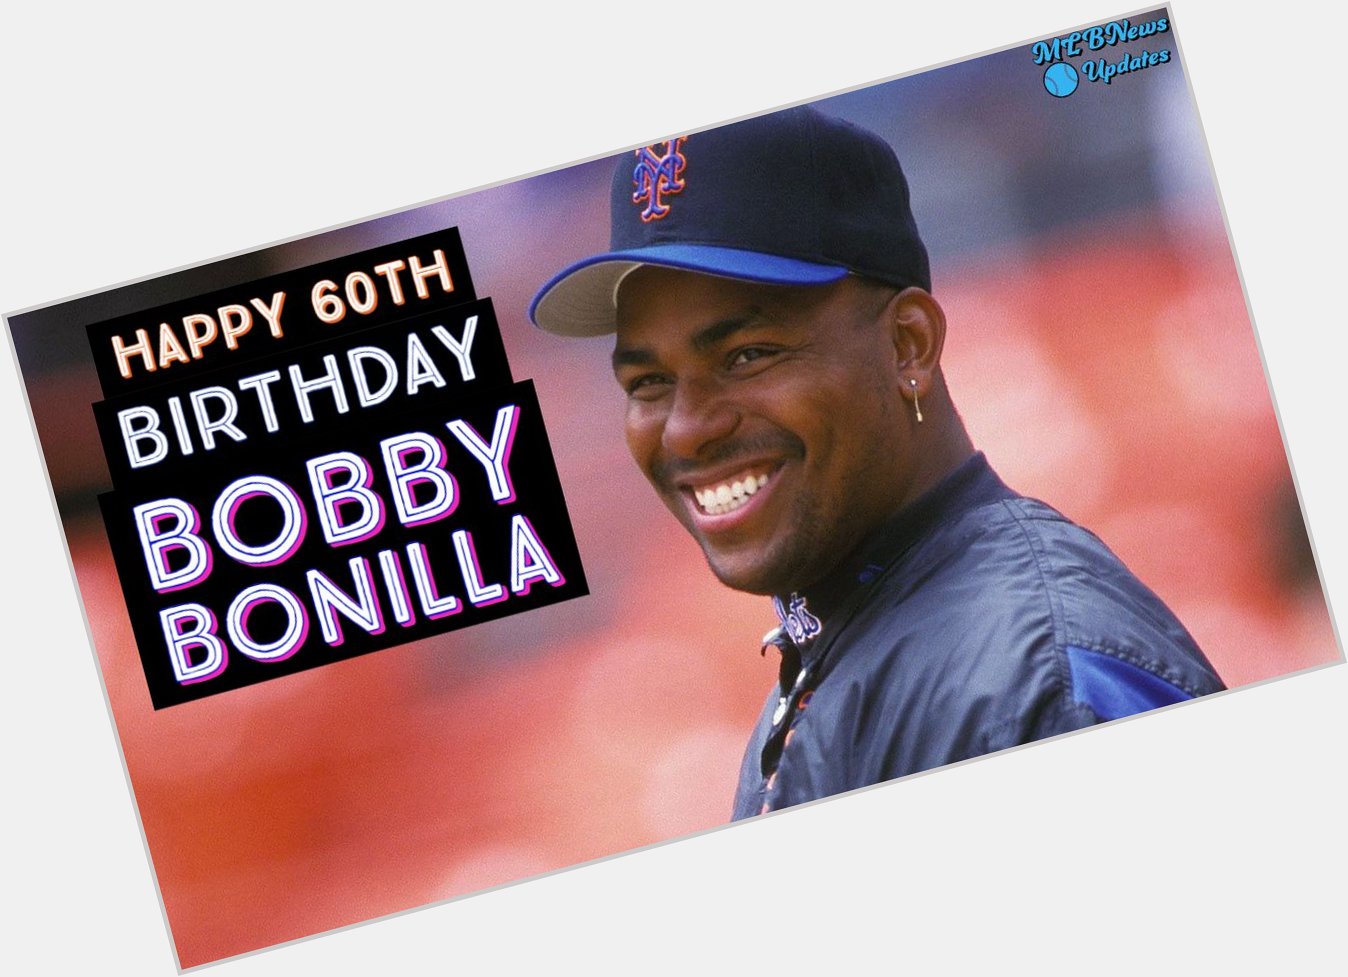 Happy 60th Birthday to Bobby Bonilla!      